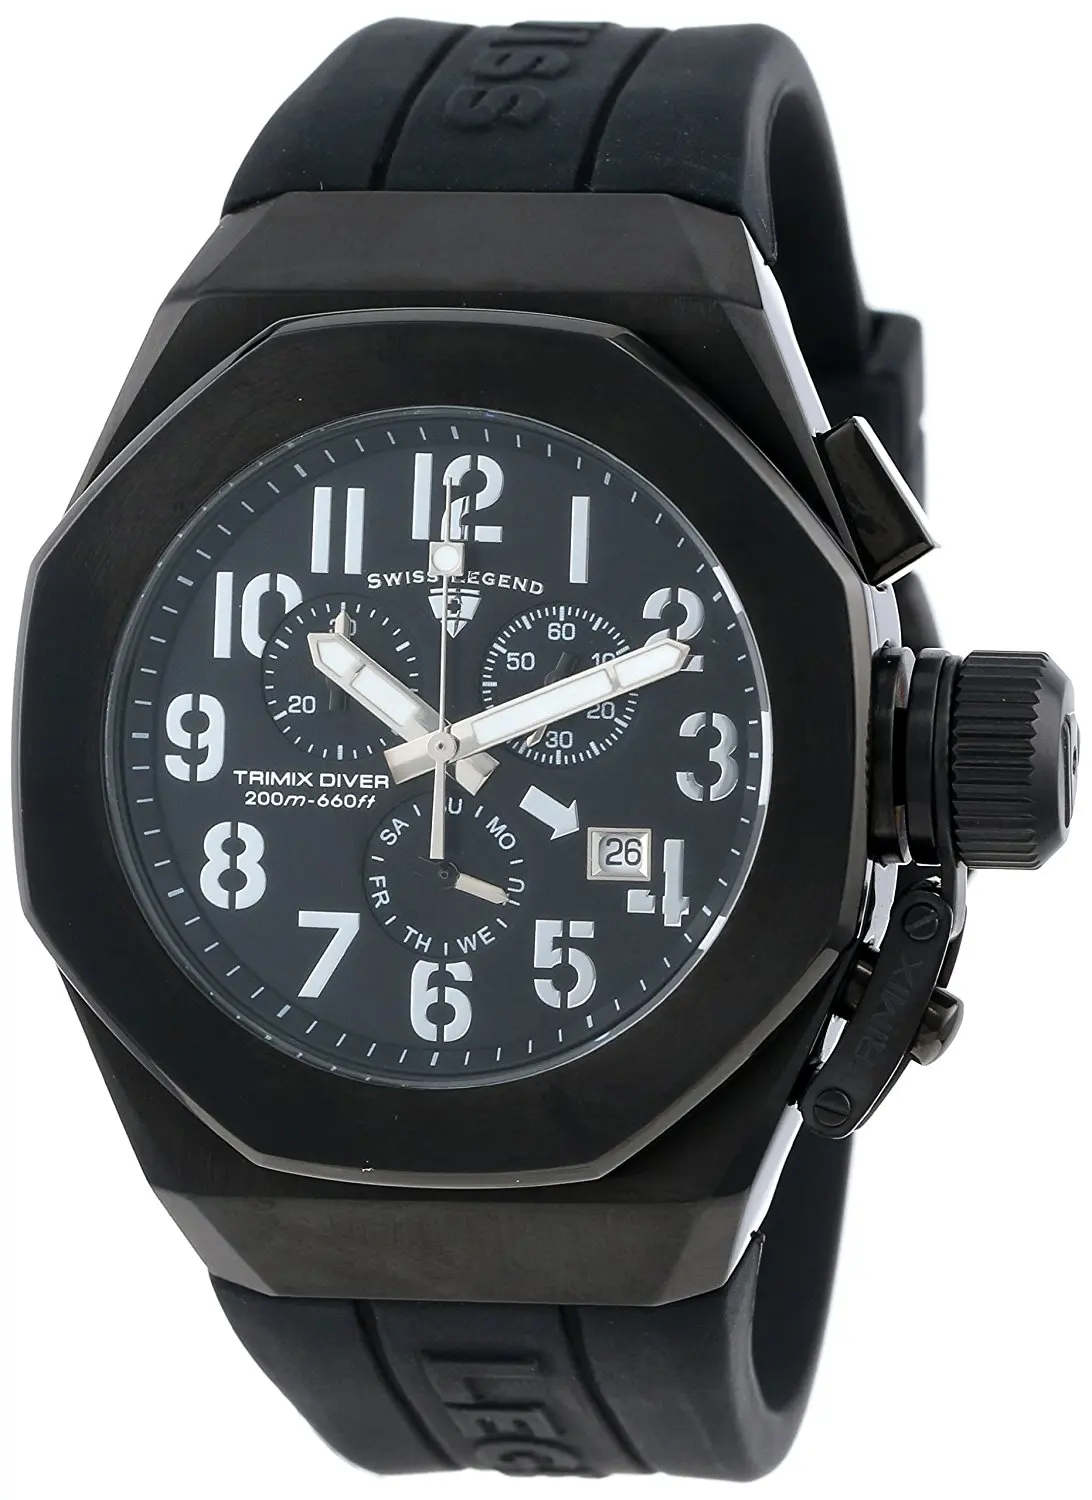 Cheap Swiss Legend Watch Band Find Swiss Legend Watch Band Deals On Line At Alibaba Com